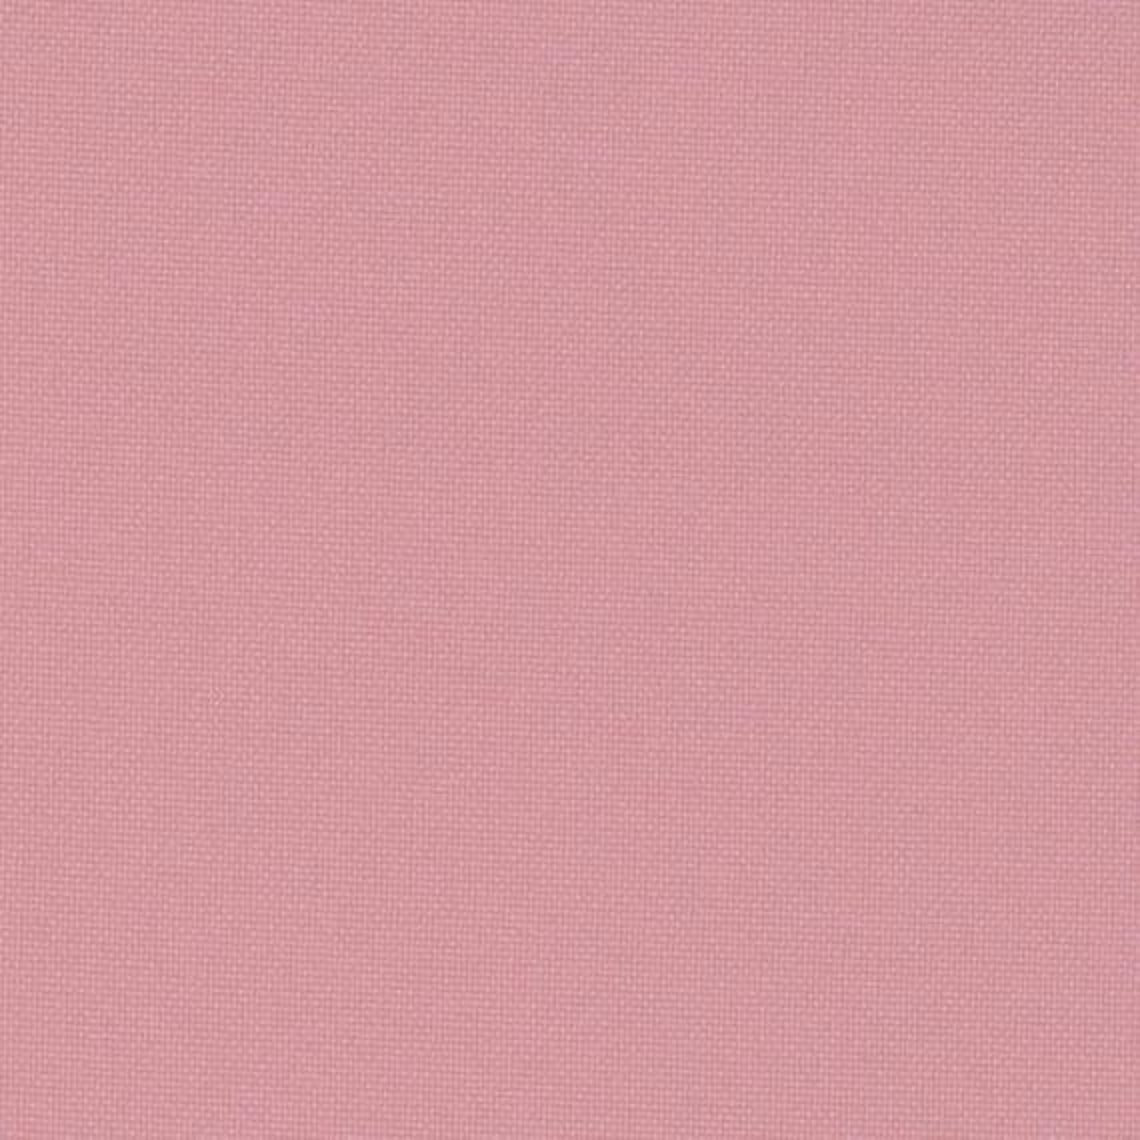 Solid Poly Poplin Fabric/ ‘’60 inches width/ Dusty RosePoplin FabricICE FABRICSICE FABRICSSolid Poly Poplin Fabric/ ‘’60 inches width/ Dusty Rose ICE FABRICS